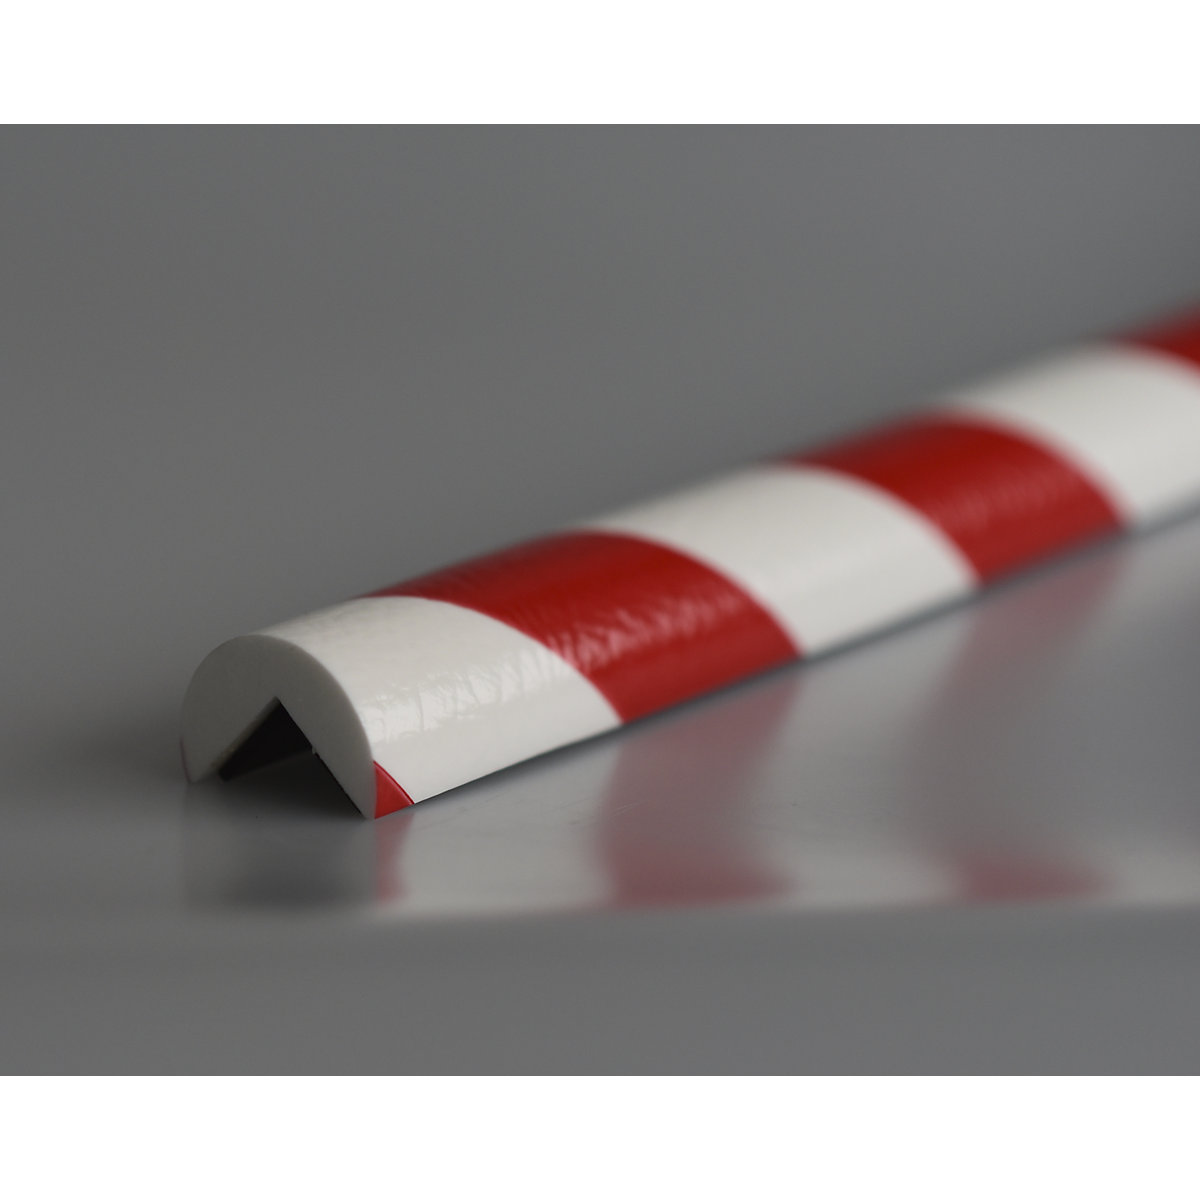 Knuffi®-hoekbescherming – SHG, type A, stuk van 1 m, rood/wit, magneethoudend-15